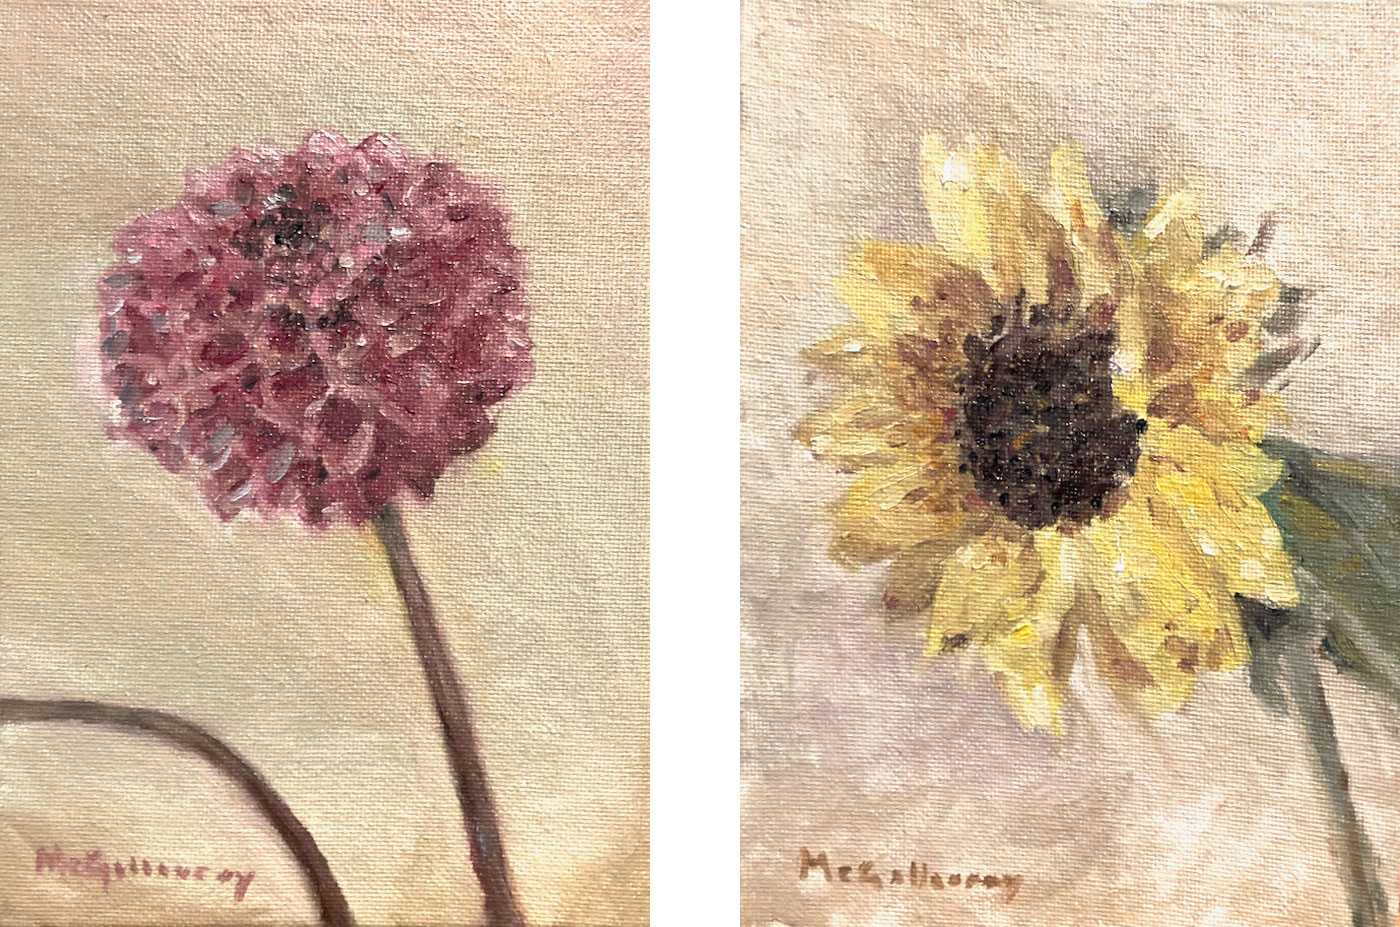 Dahlia and sunflower